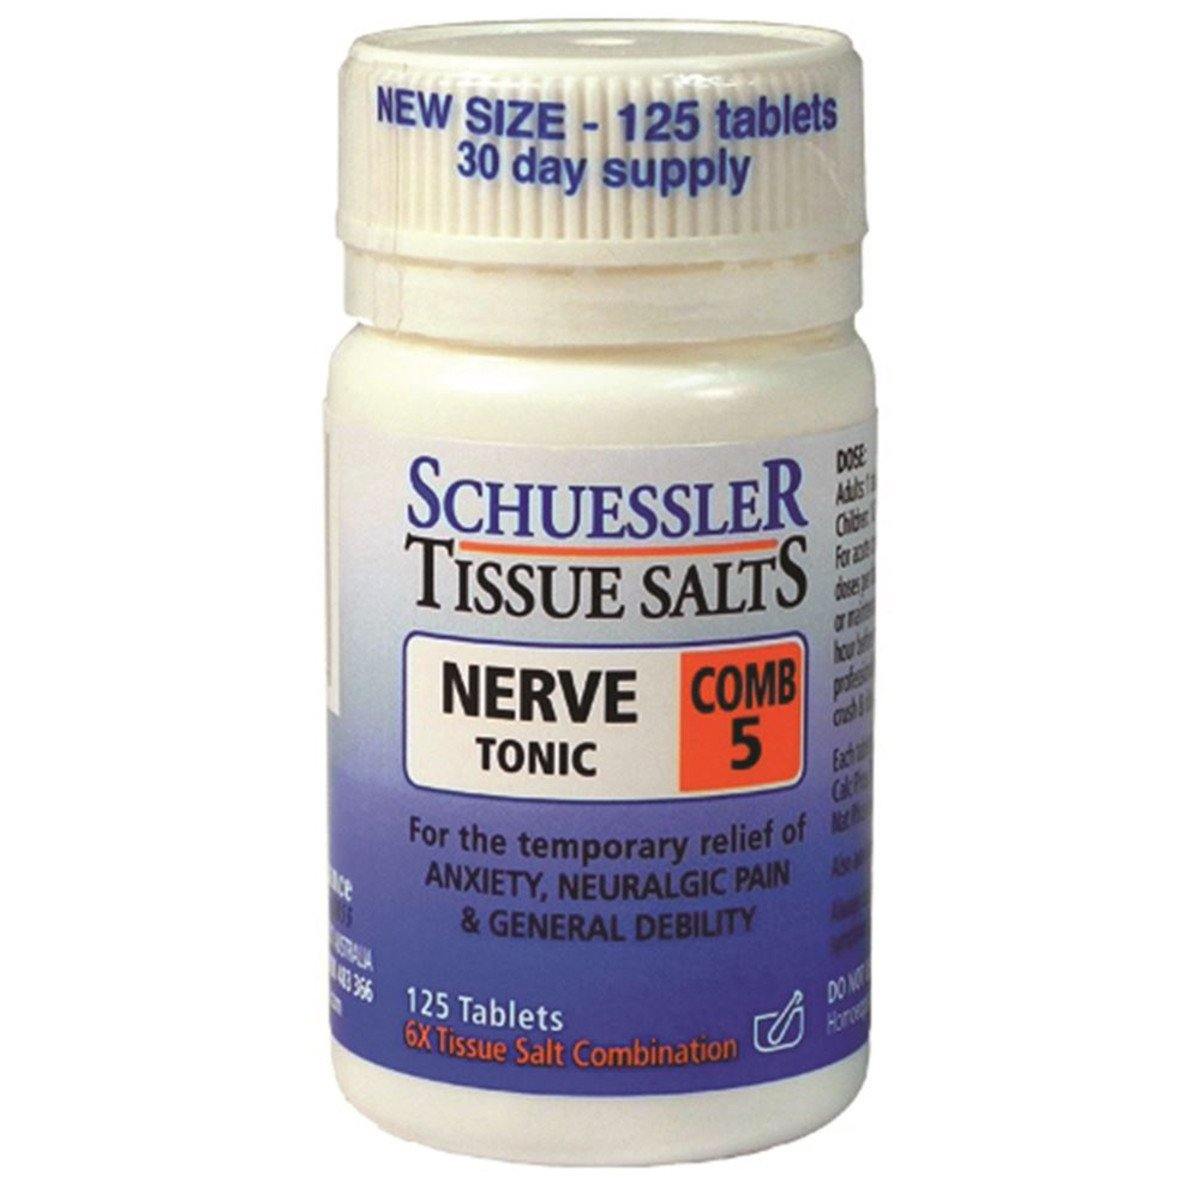 Martin & Pleasance Schuessler Tissue Salts Comb 5 (Nerve Tonic) 125 Tablets - QVM Vitamins™